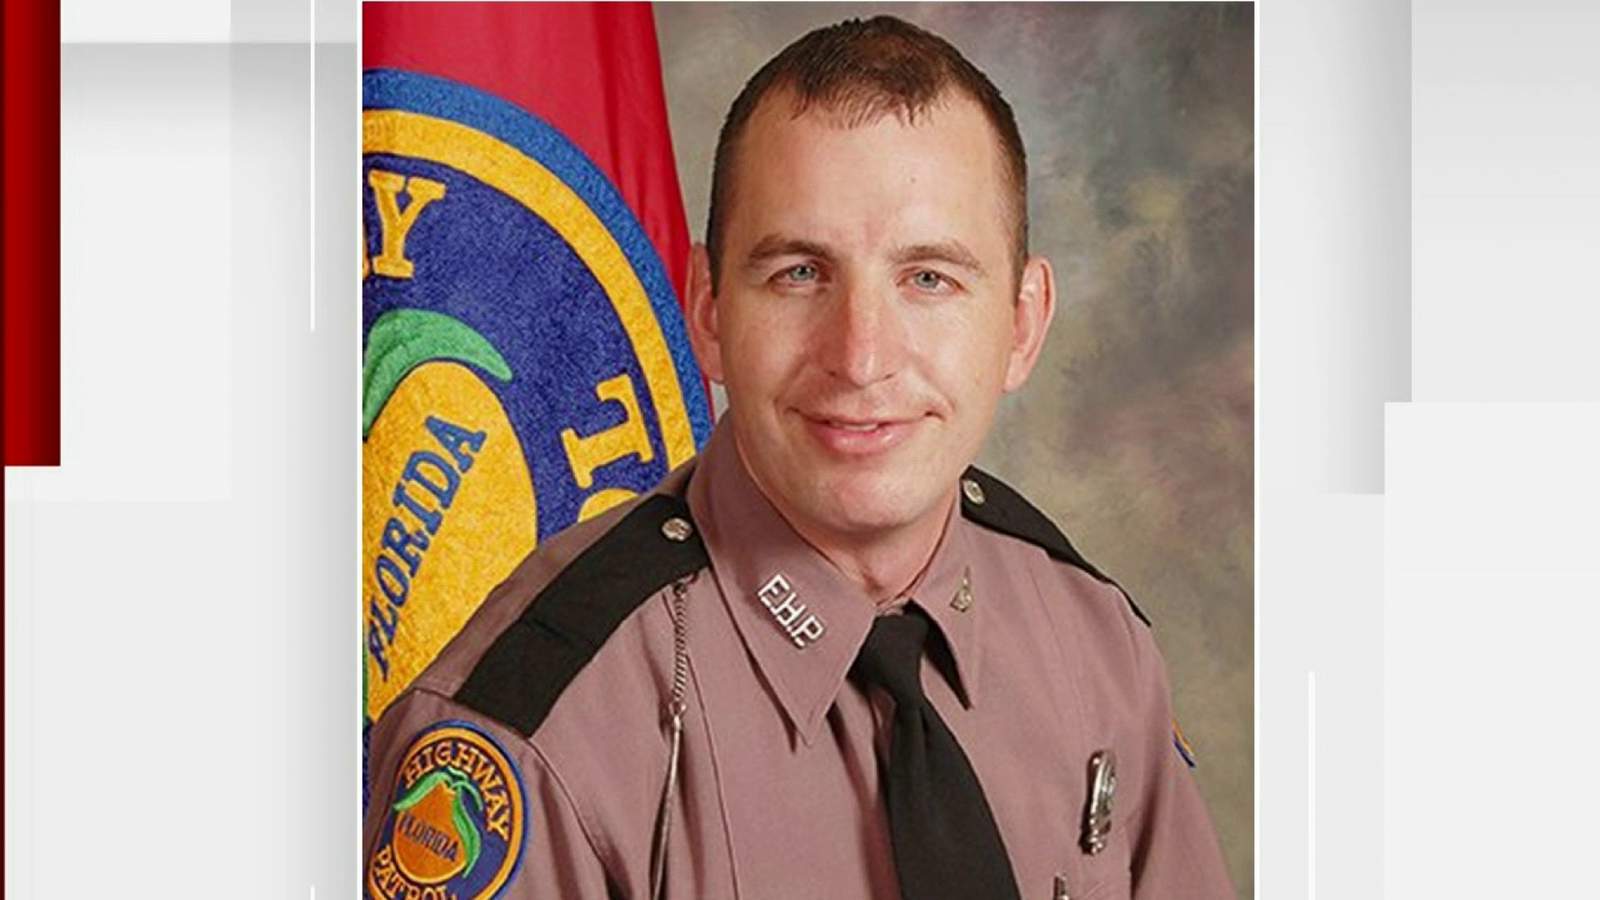 Man accused of killing Florida trooper identified